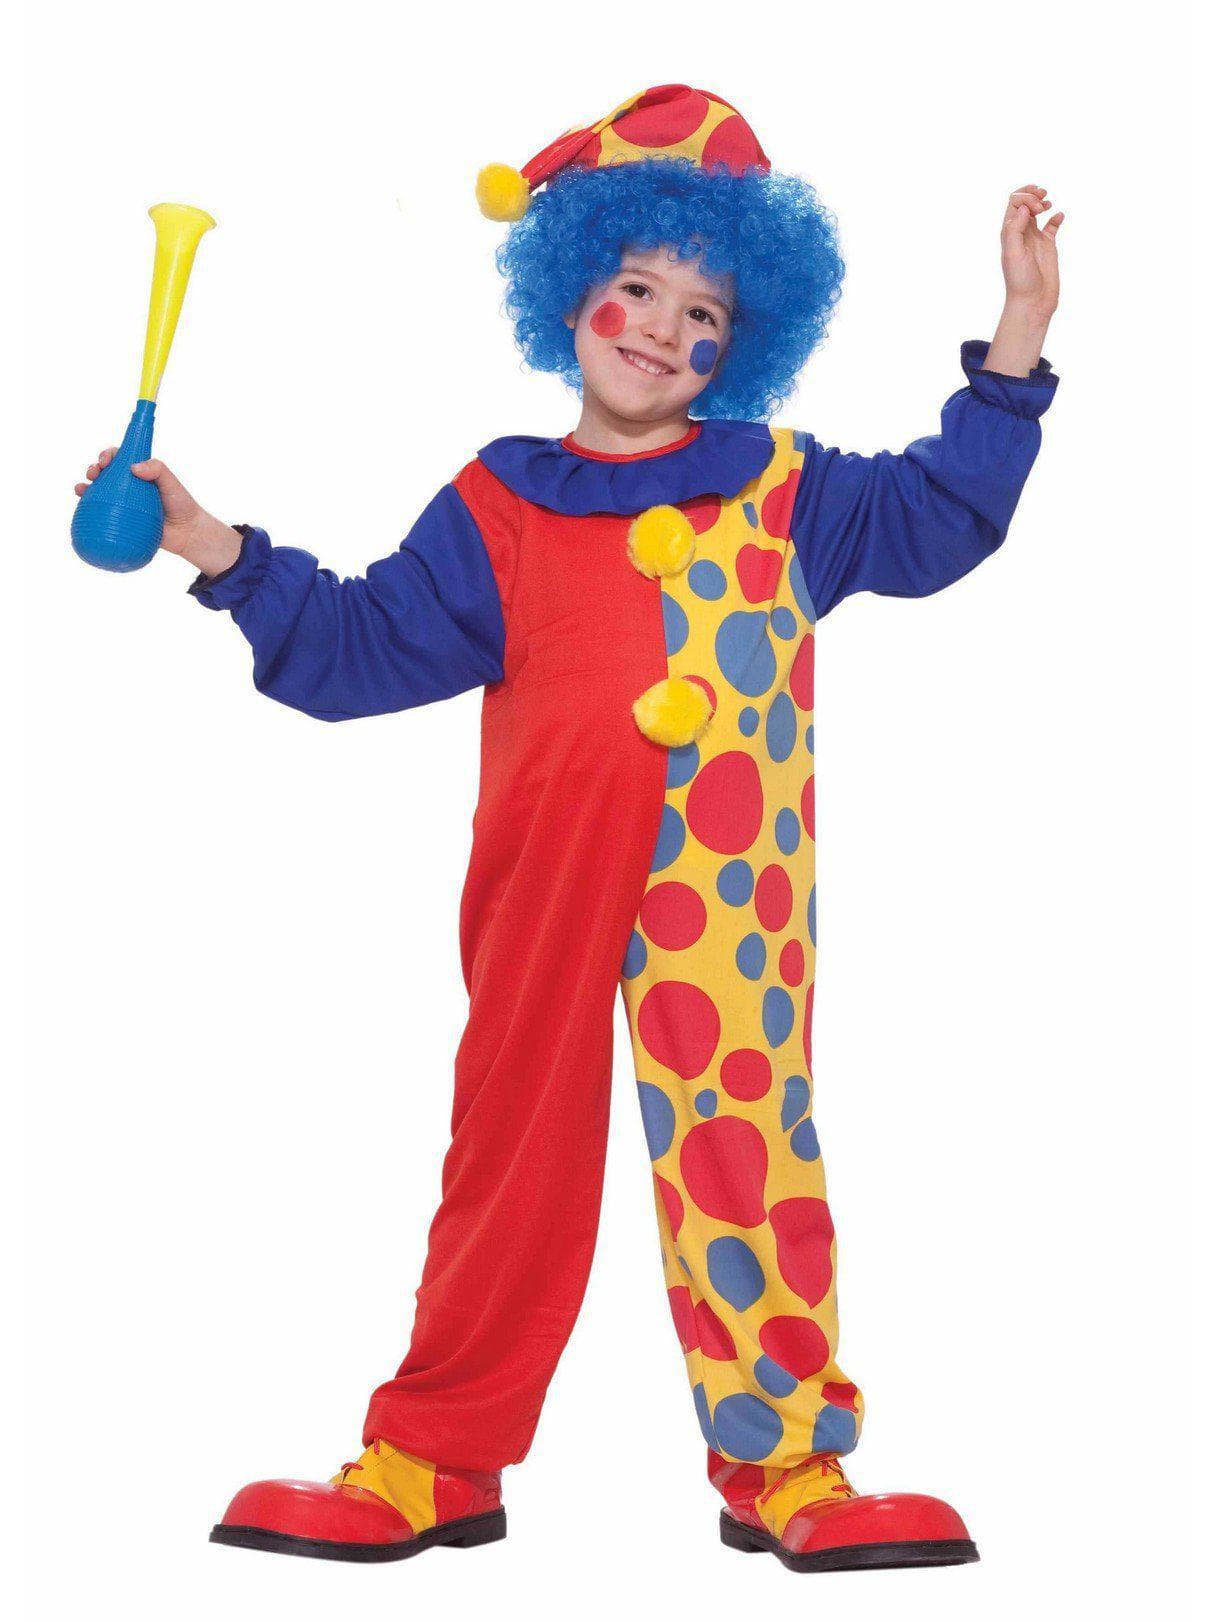 Kid's Clown Costume - costumes.com